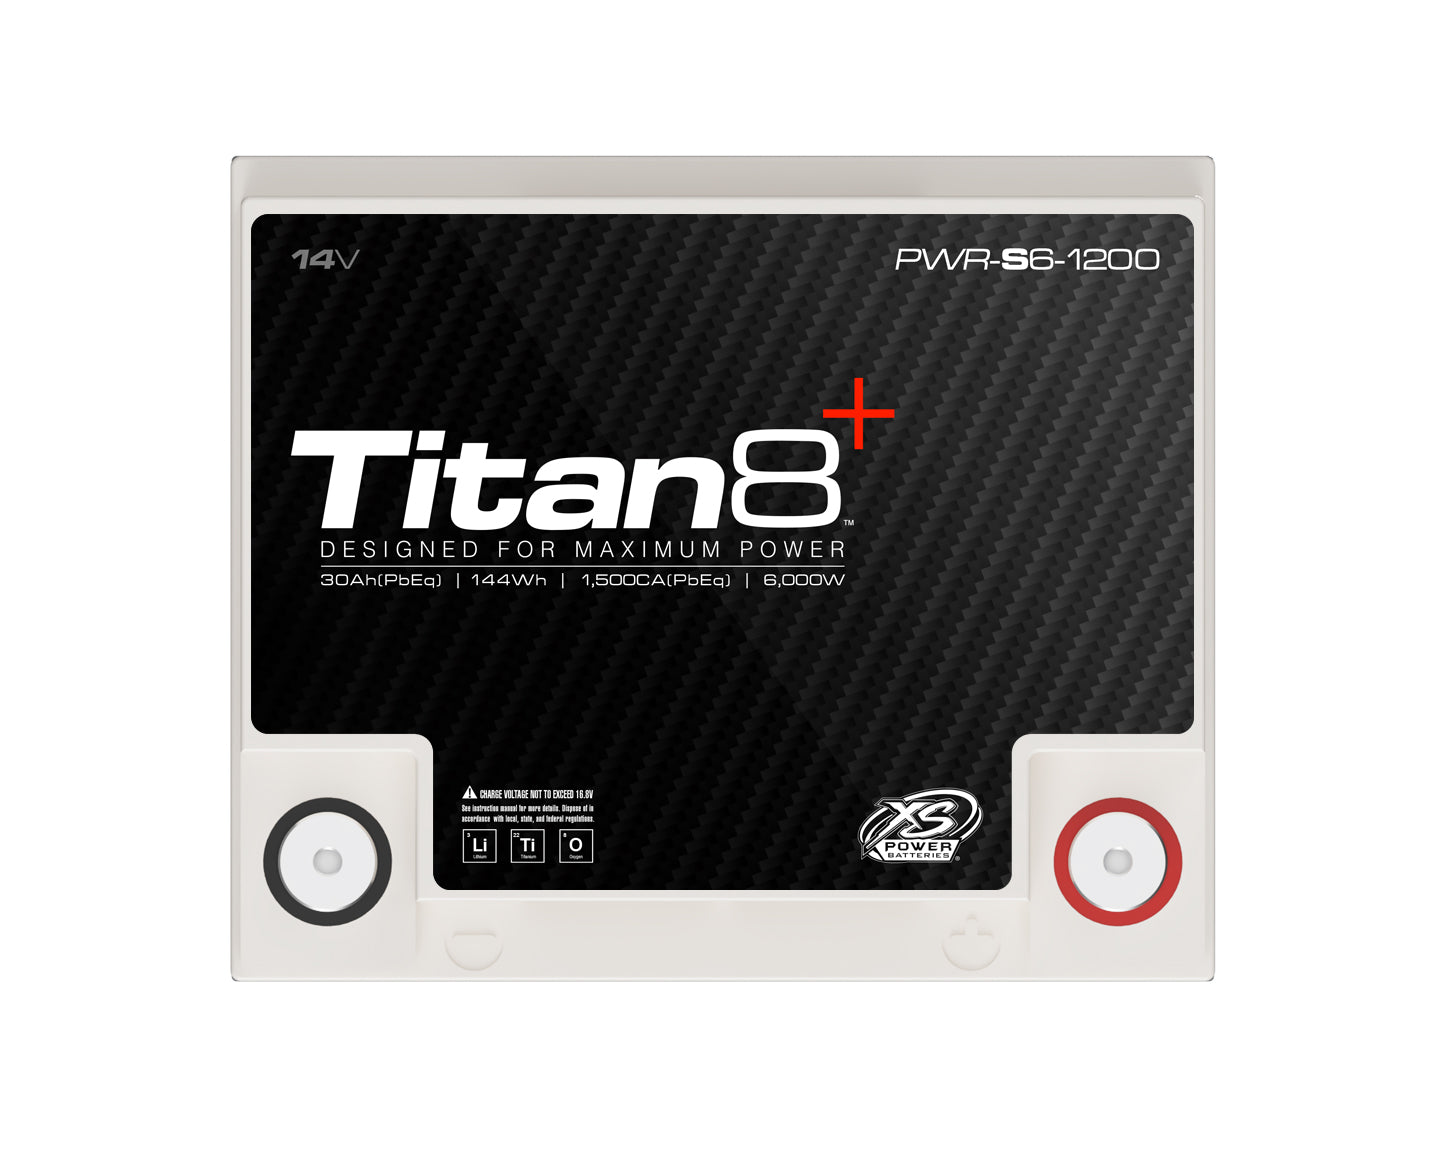 PWR-S6-1200 XS Power Titan8 14VDC Lithium LTO Car Audio Vehicle Battery 5000W 144Wh